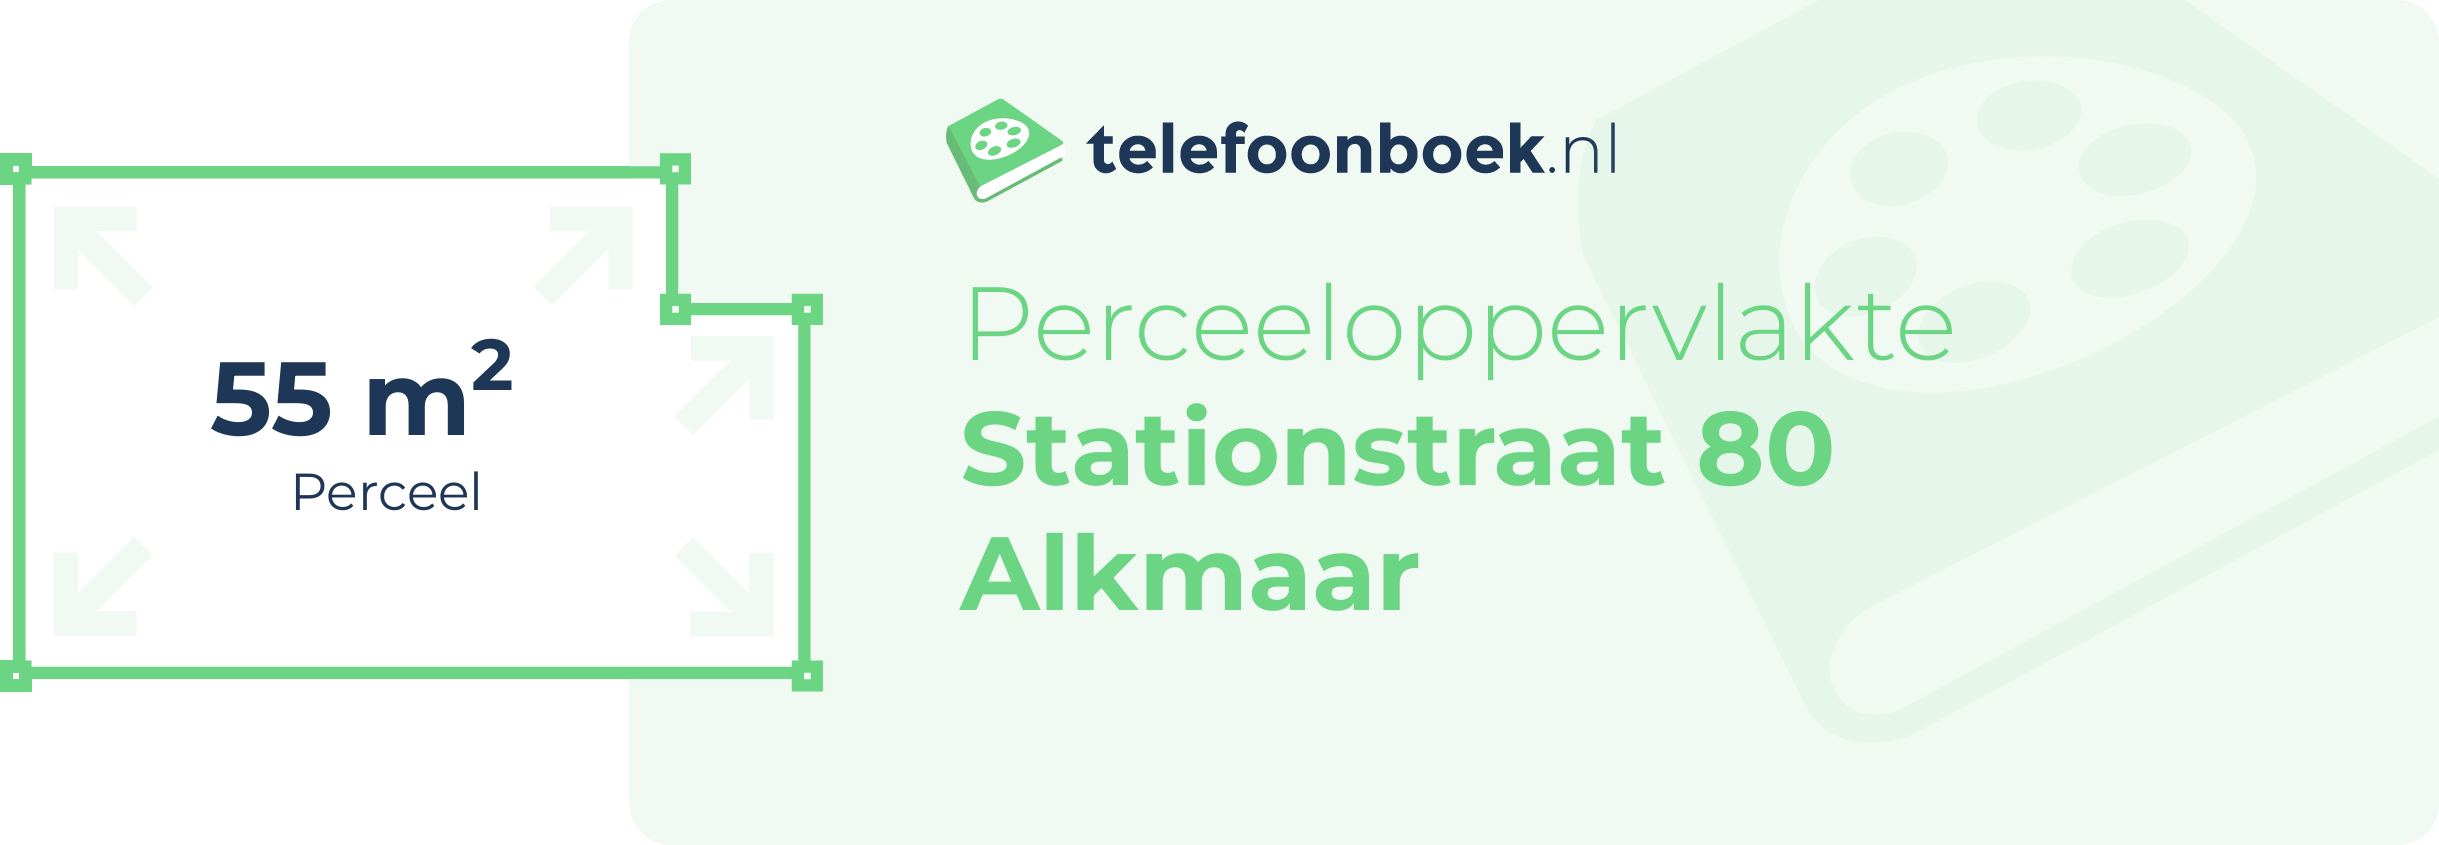 Perceeloppervlakte Stationstraat 80 Alkmaar